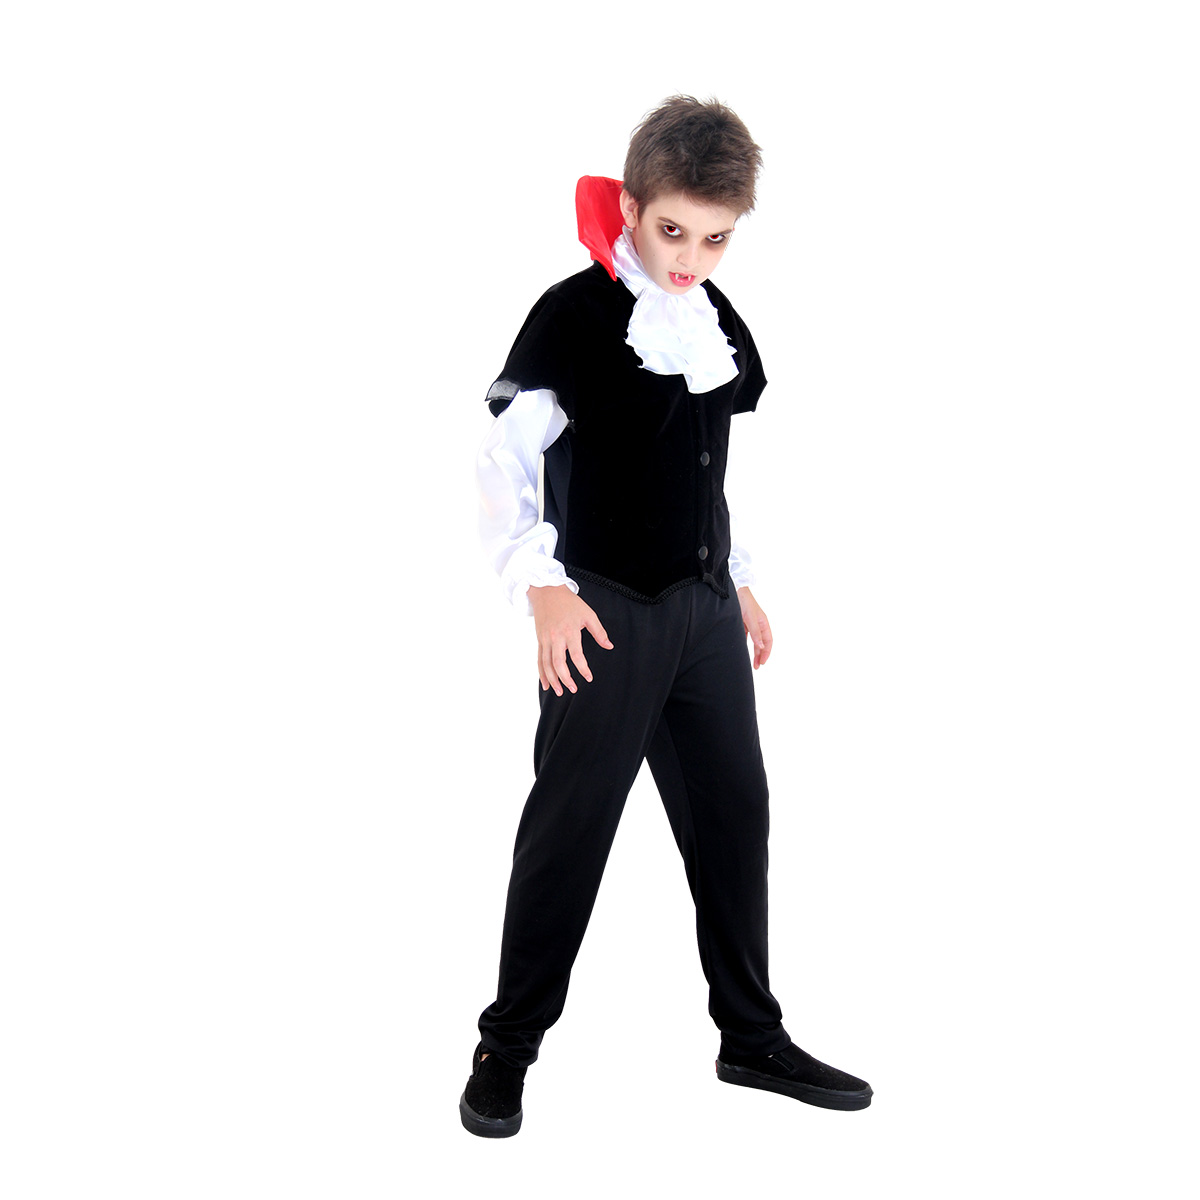 Fantasia de Pirata Infantil Halloween Masculino Com Bandana e Tapa Olho -  Ri Happy